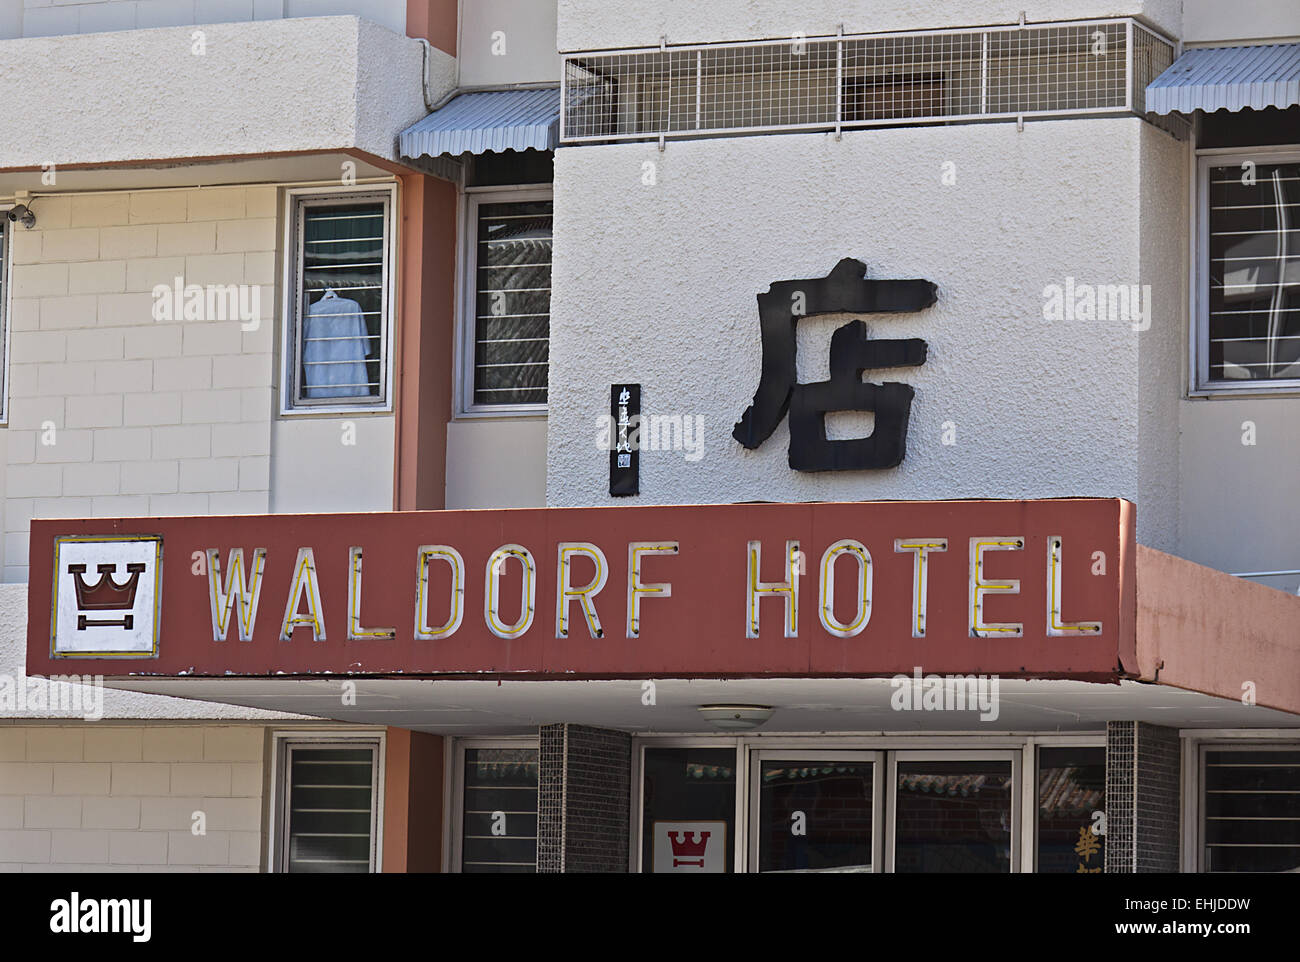 Waldorf Hotel Stock Photo